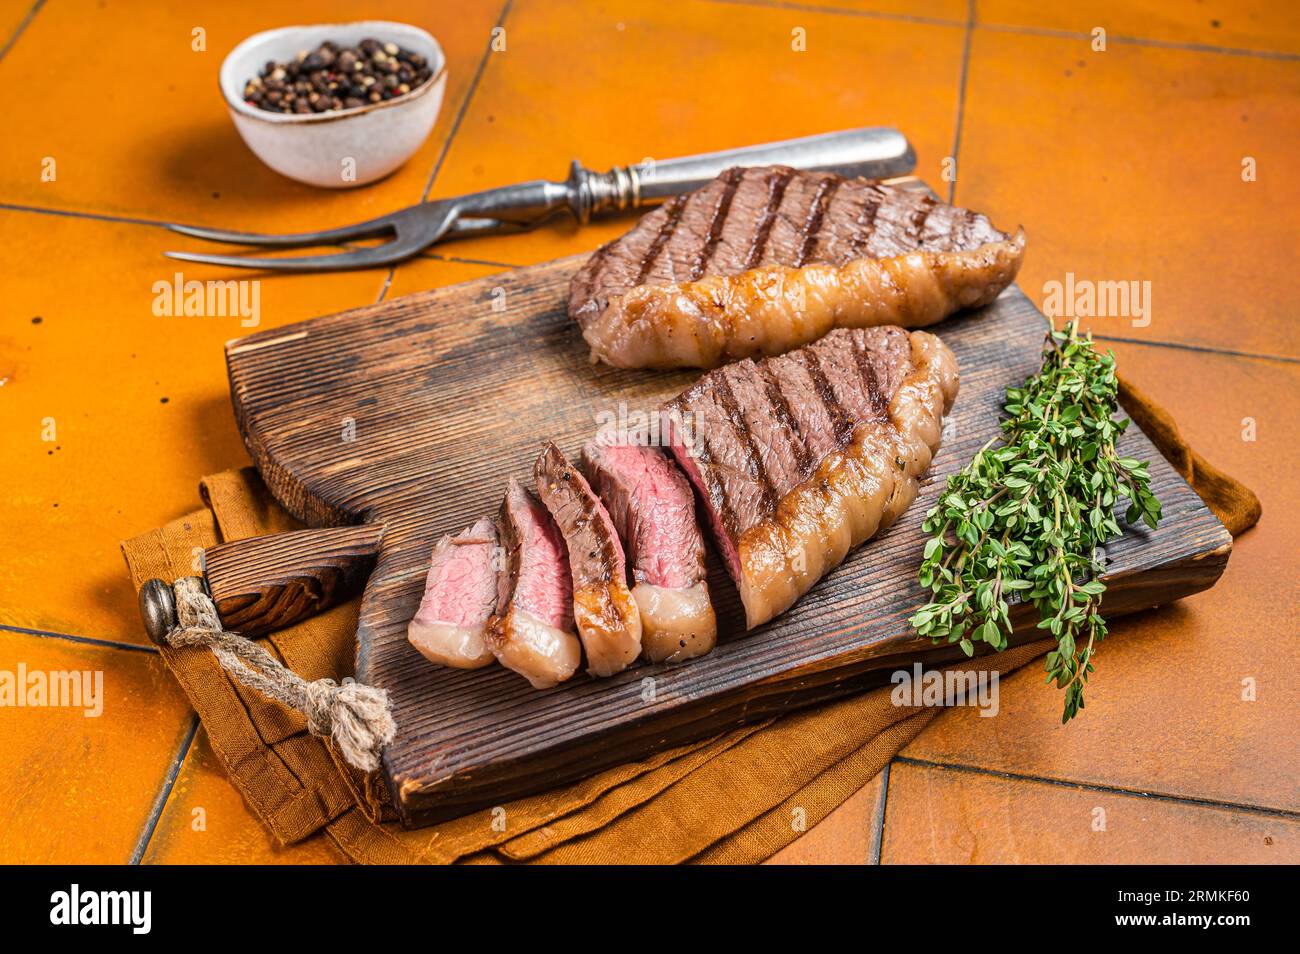 BBQ Roast brazilian Picanha steak, cup rump beef meat steak on a wooden serving board. Orange background. Top view. Stock Photo